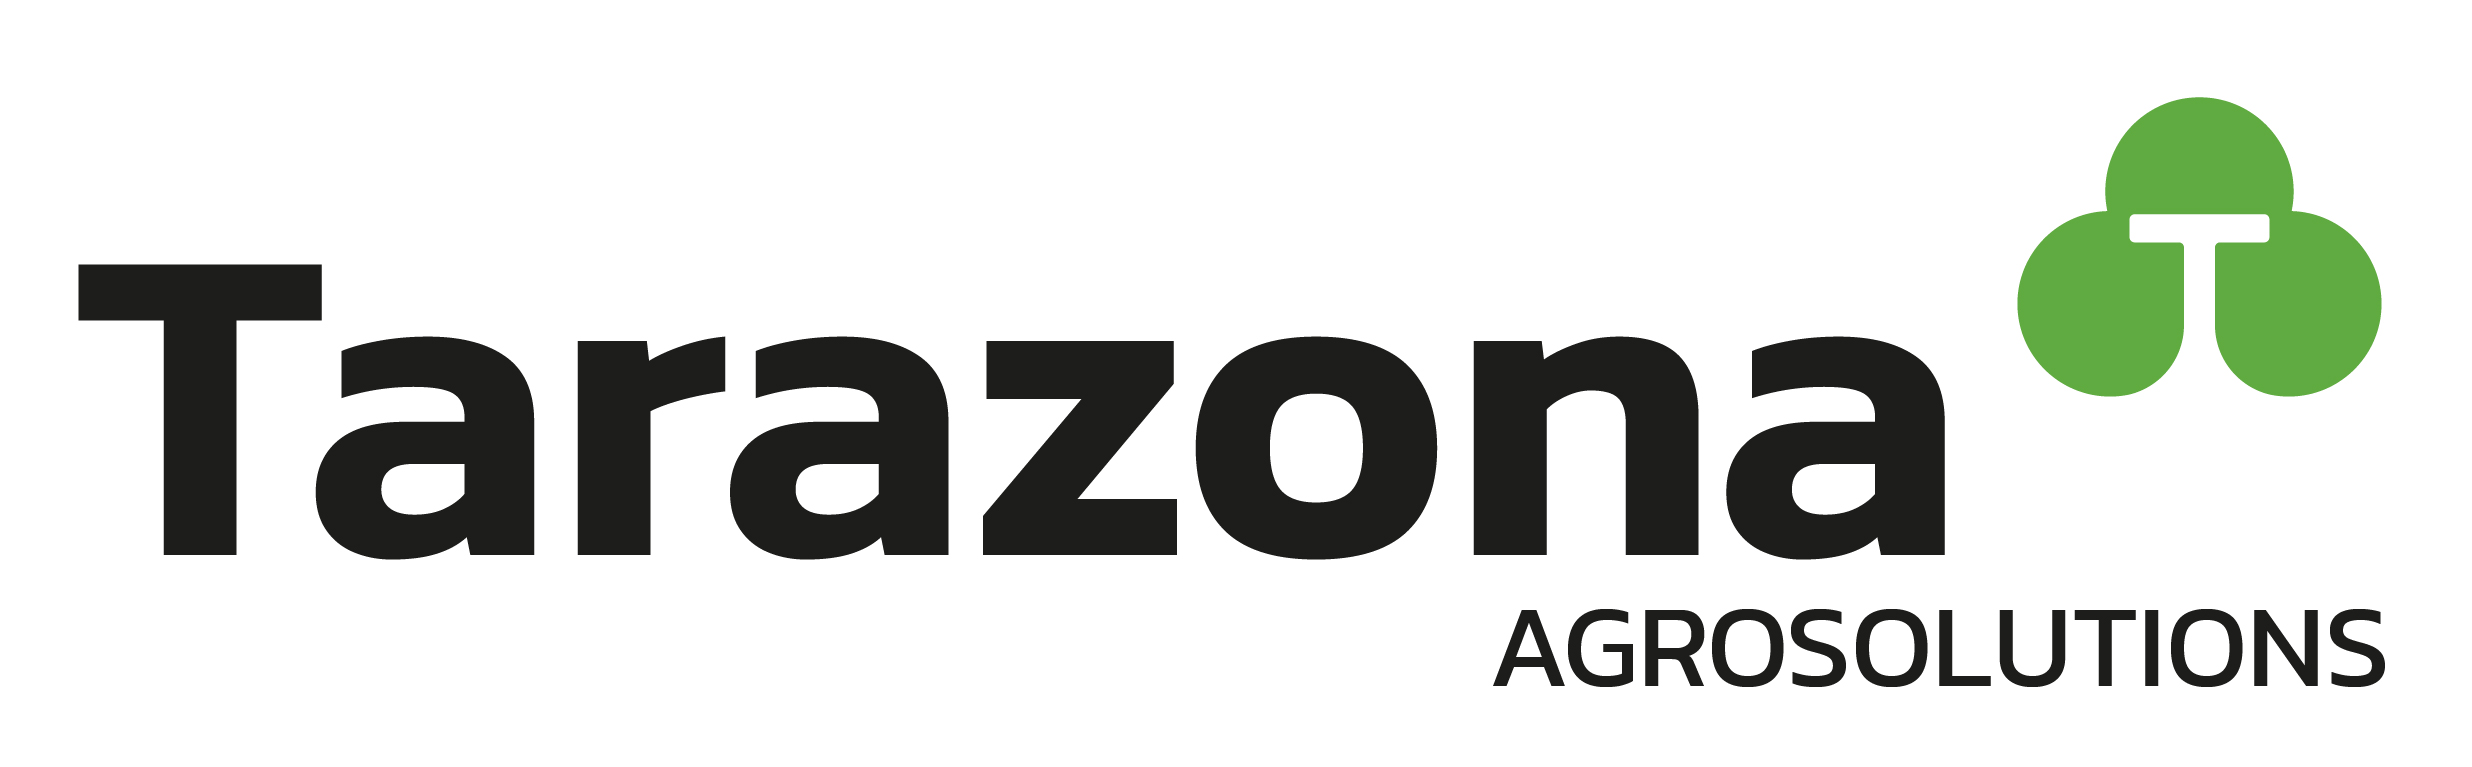 TARAZONA AGROSOLUTIONS logo nueva 060624